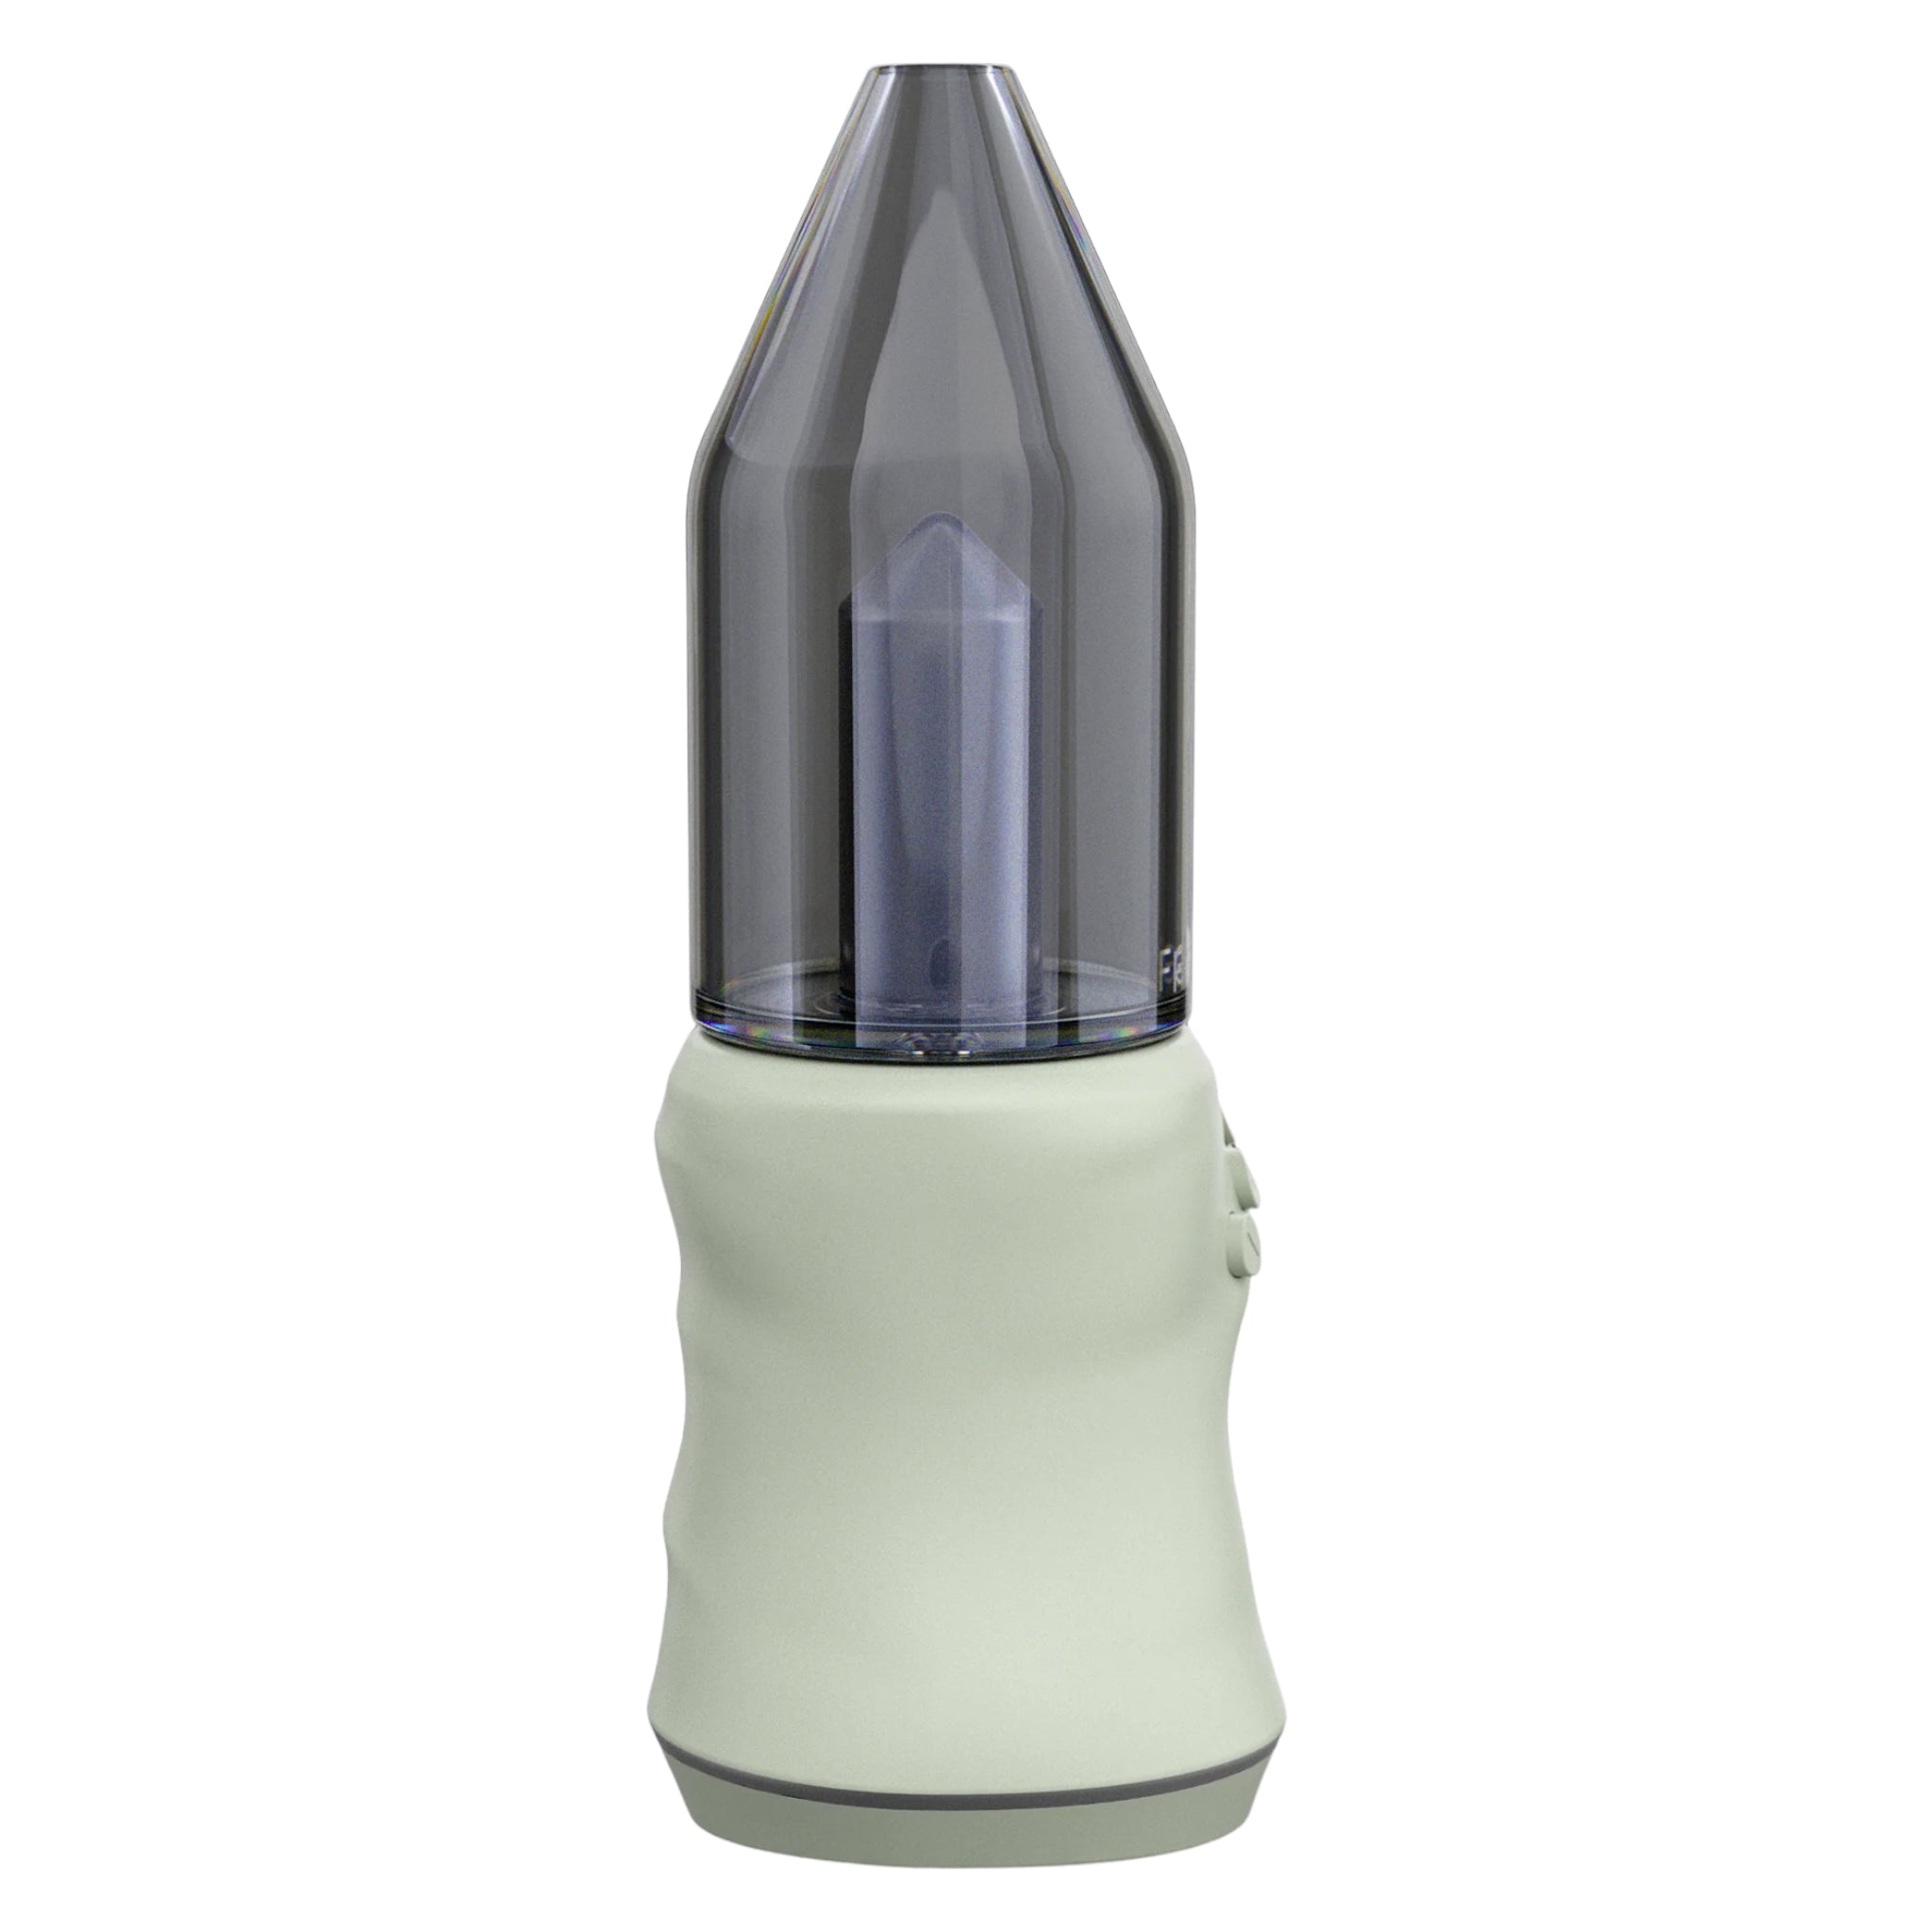 Focus V - CARTA 2 - Portable Dry Herb & Wax Oil Vaporizer - Mint Green